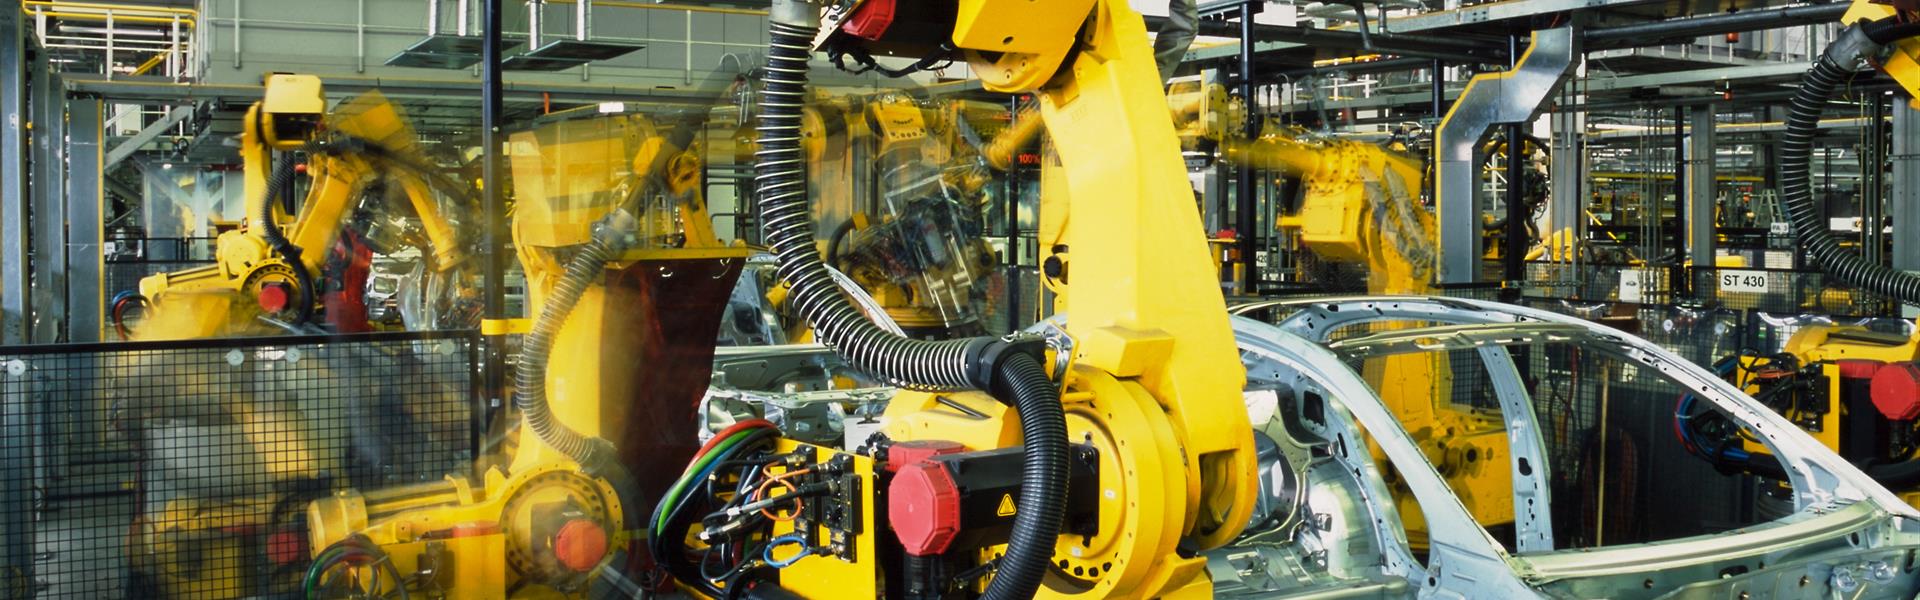 Image-Picture-Robotic-Yellow-Automotive-Industry-20151118-GLO-EN